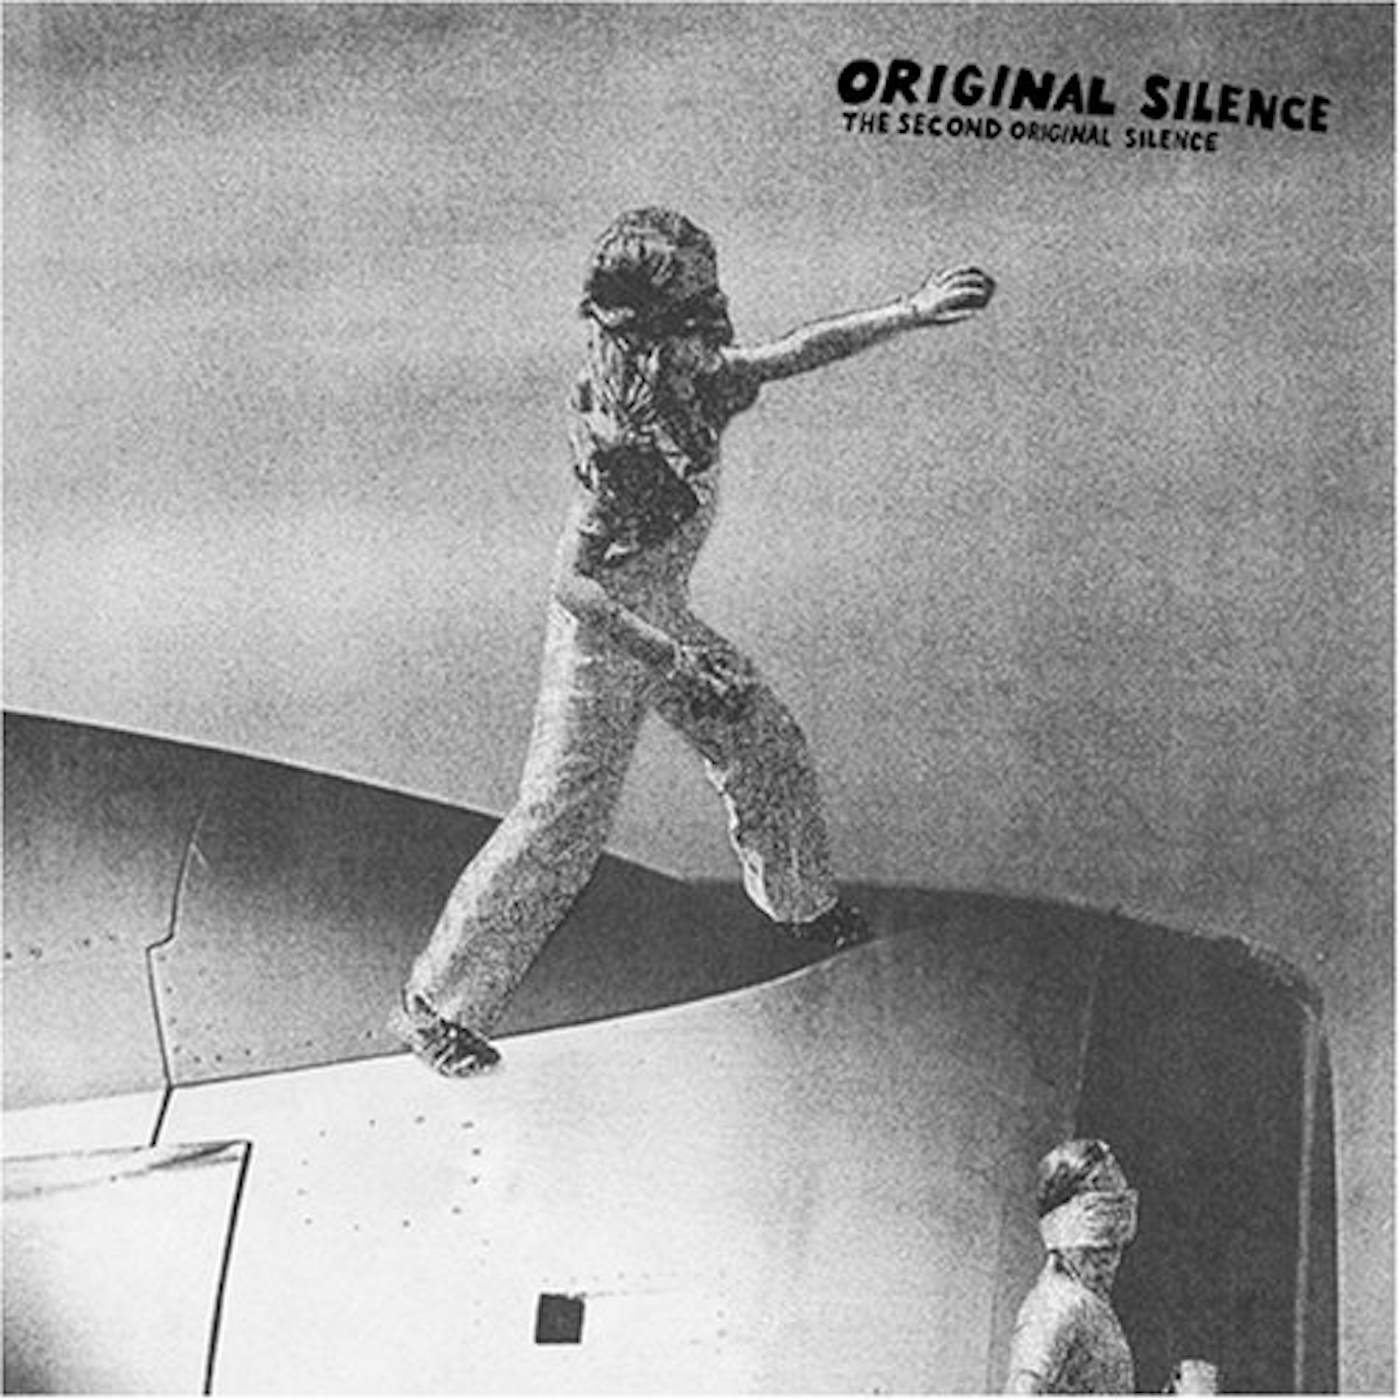 SECOND ORIGINAL SILENCE CD